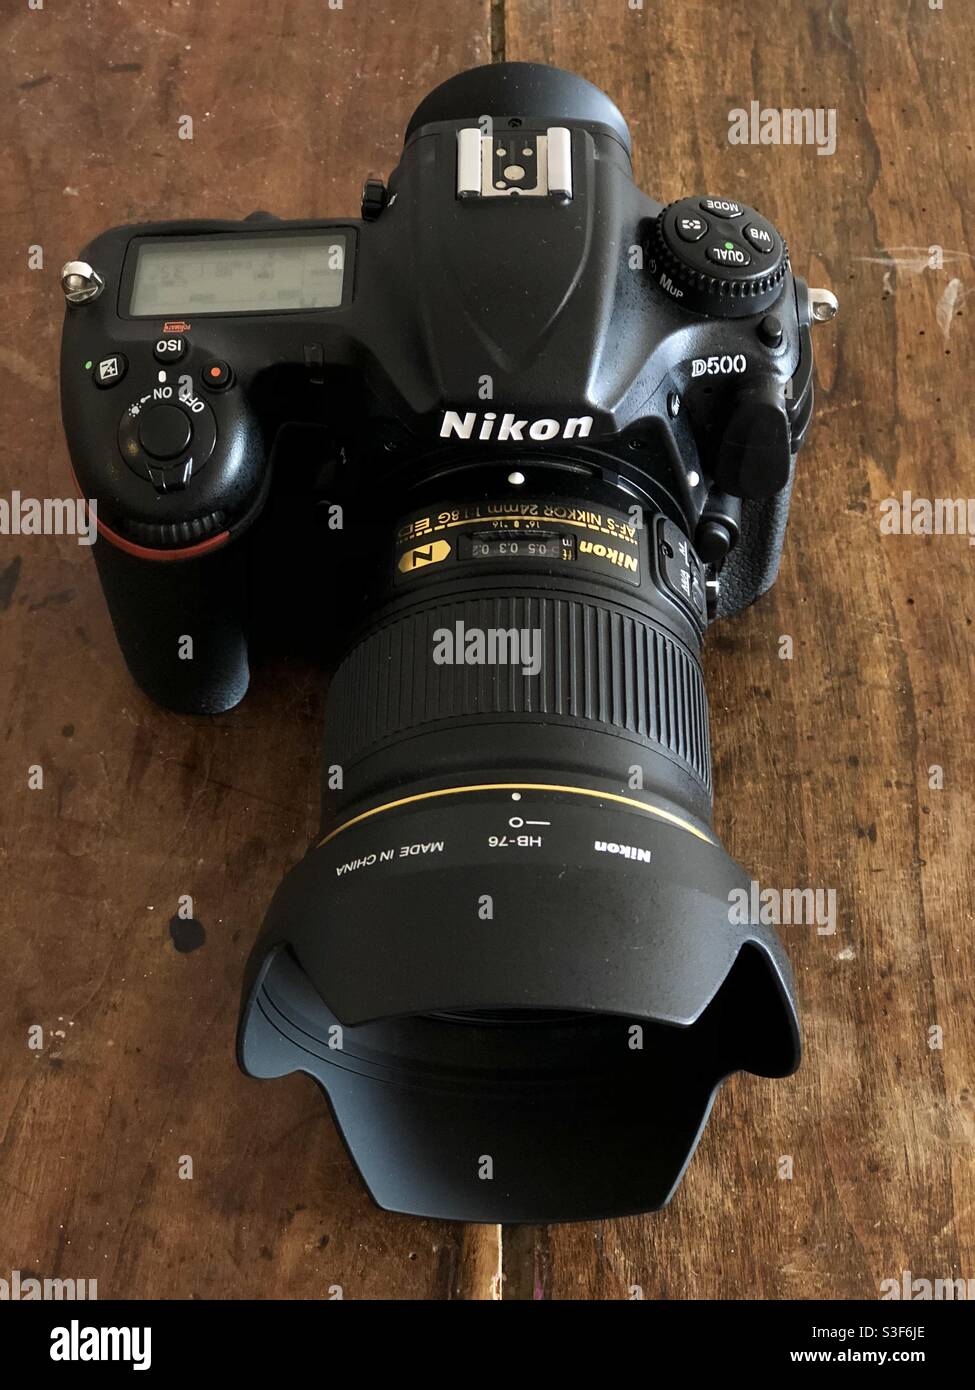 Nikon d500 hi-res stock photography and images - Alamy